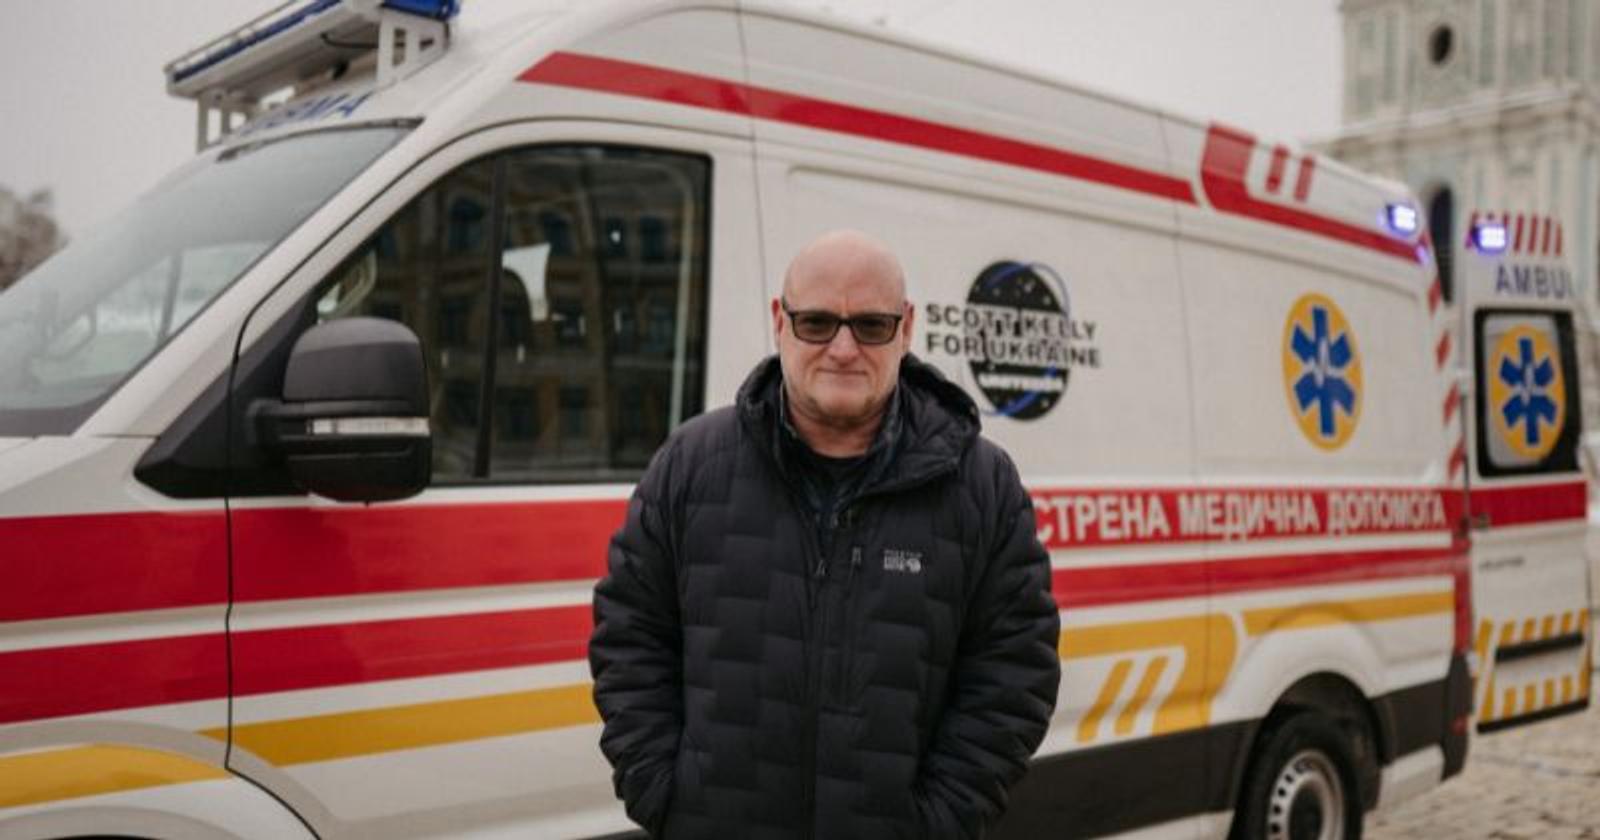 Scott Kelly`s fundraiser for ambulances to support Ukraine